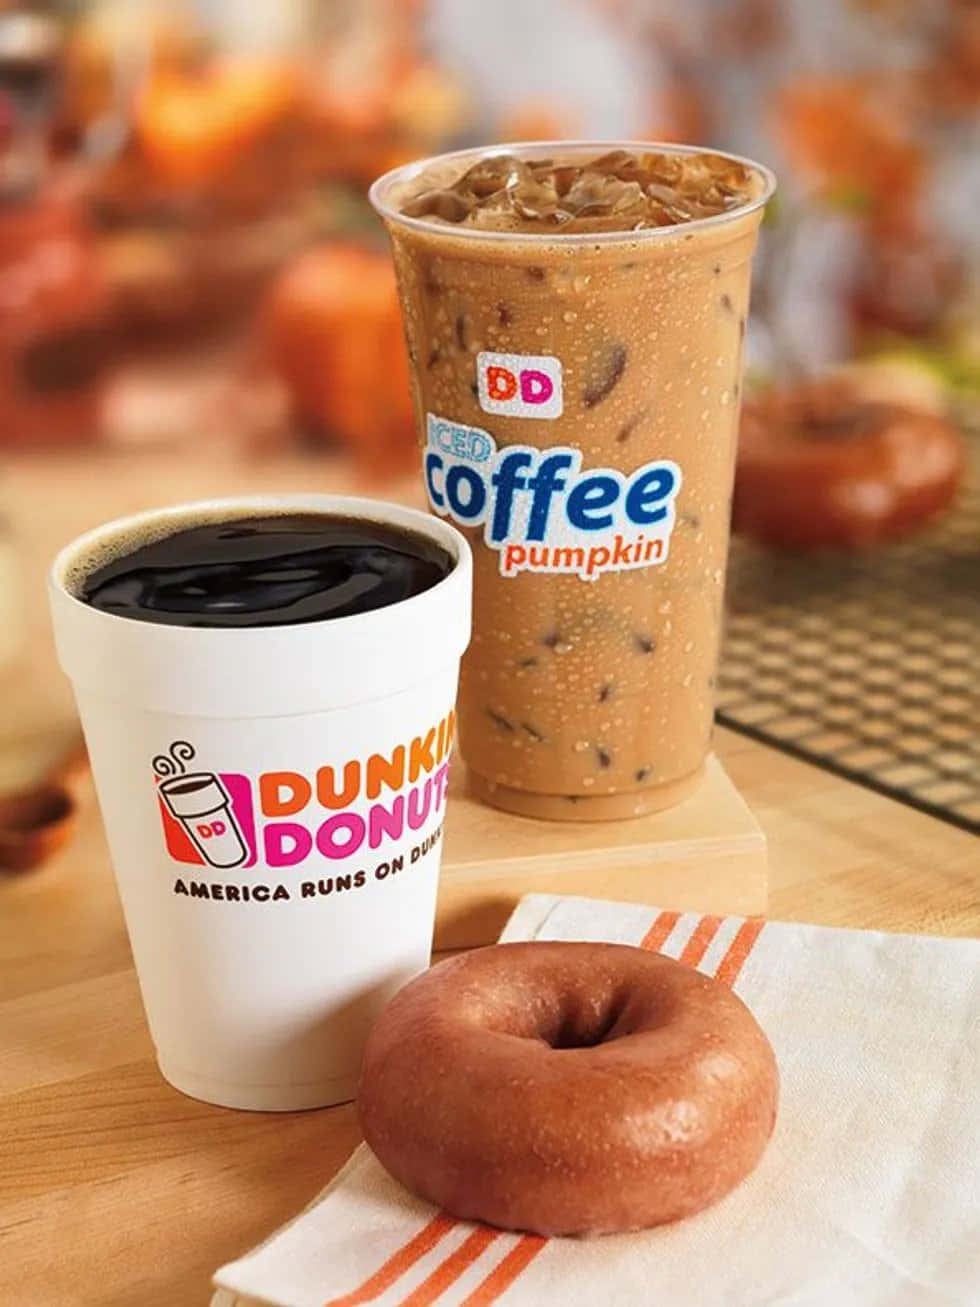 Enjoy the great taste of Dunkin Donuts fresh-brewed coffee!